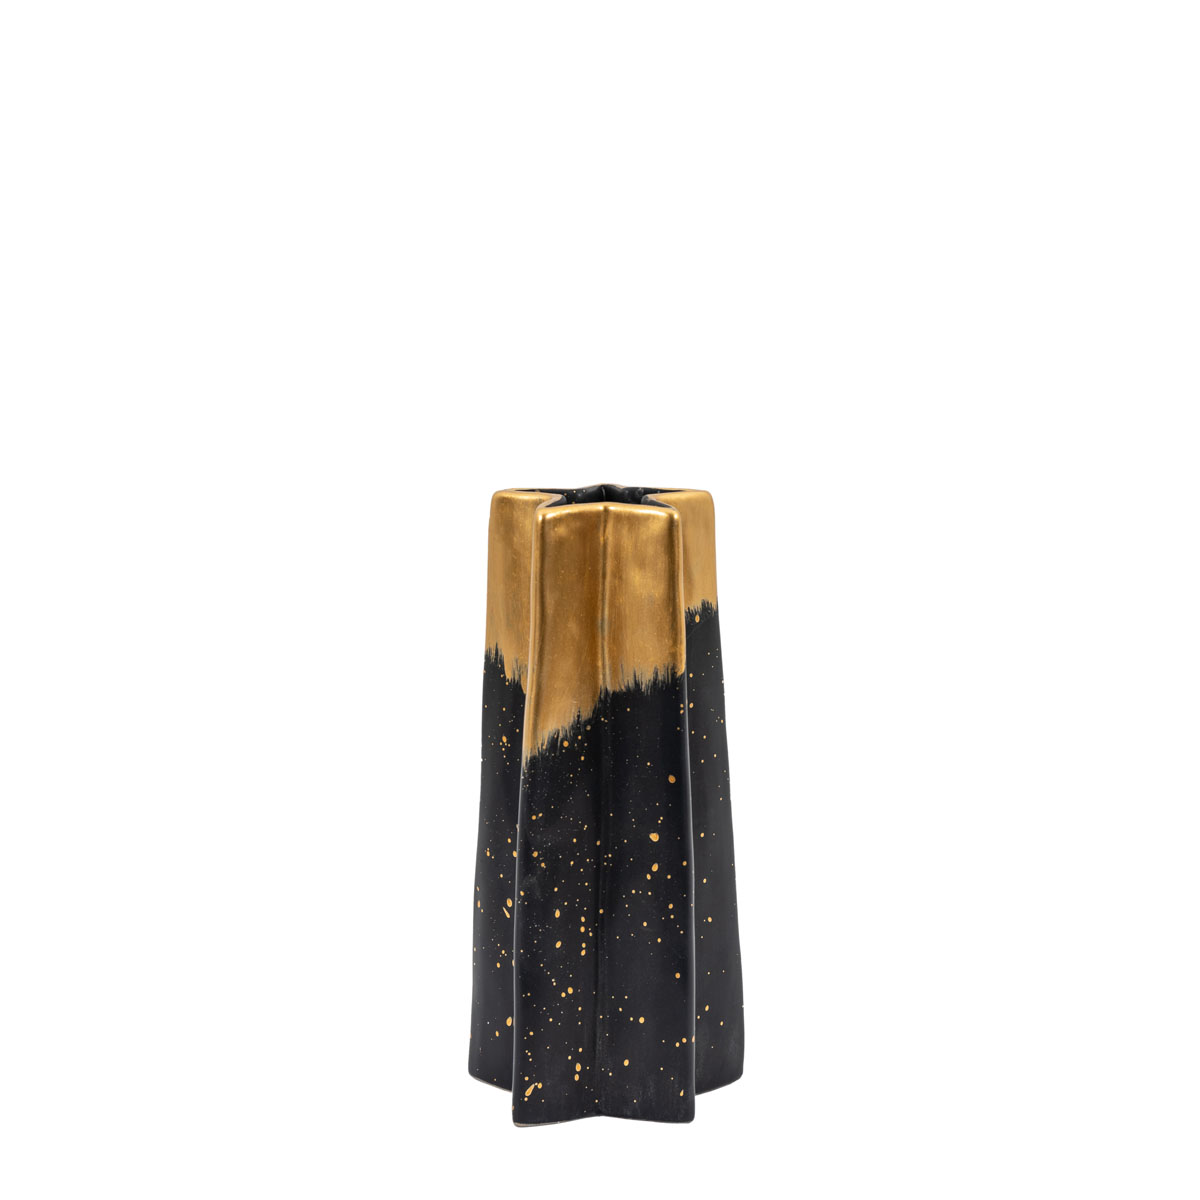 Shooting Star Vase Small Black Gold 105x105x235mm